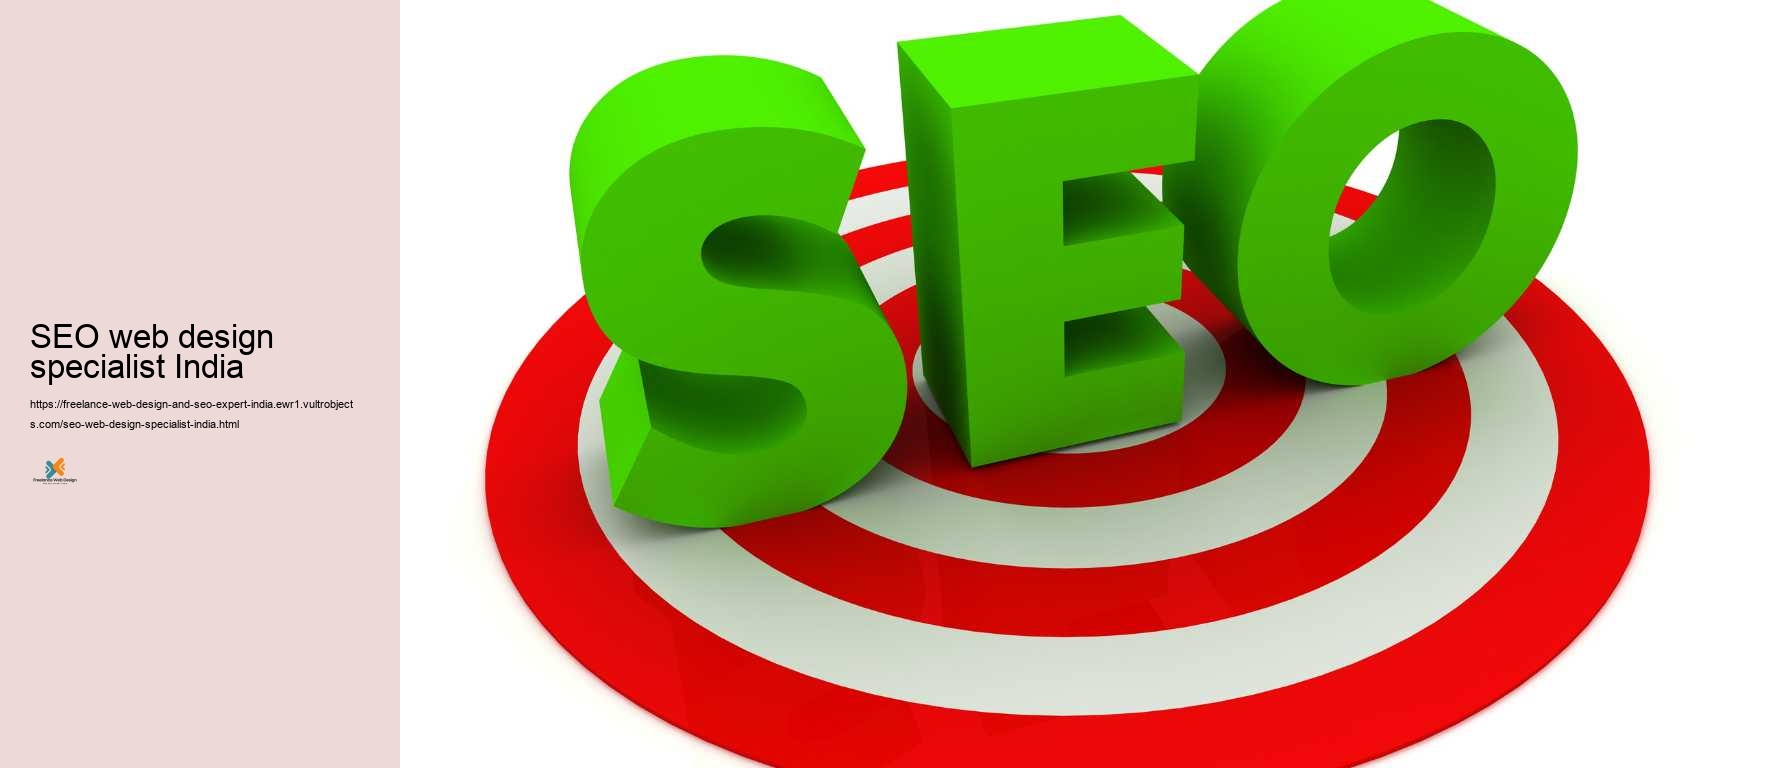 SEO web design specialist India